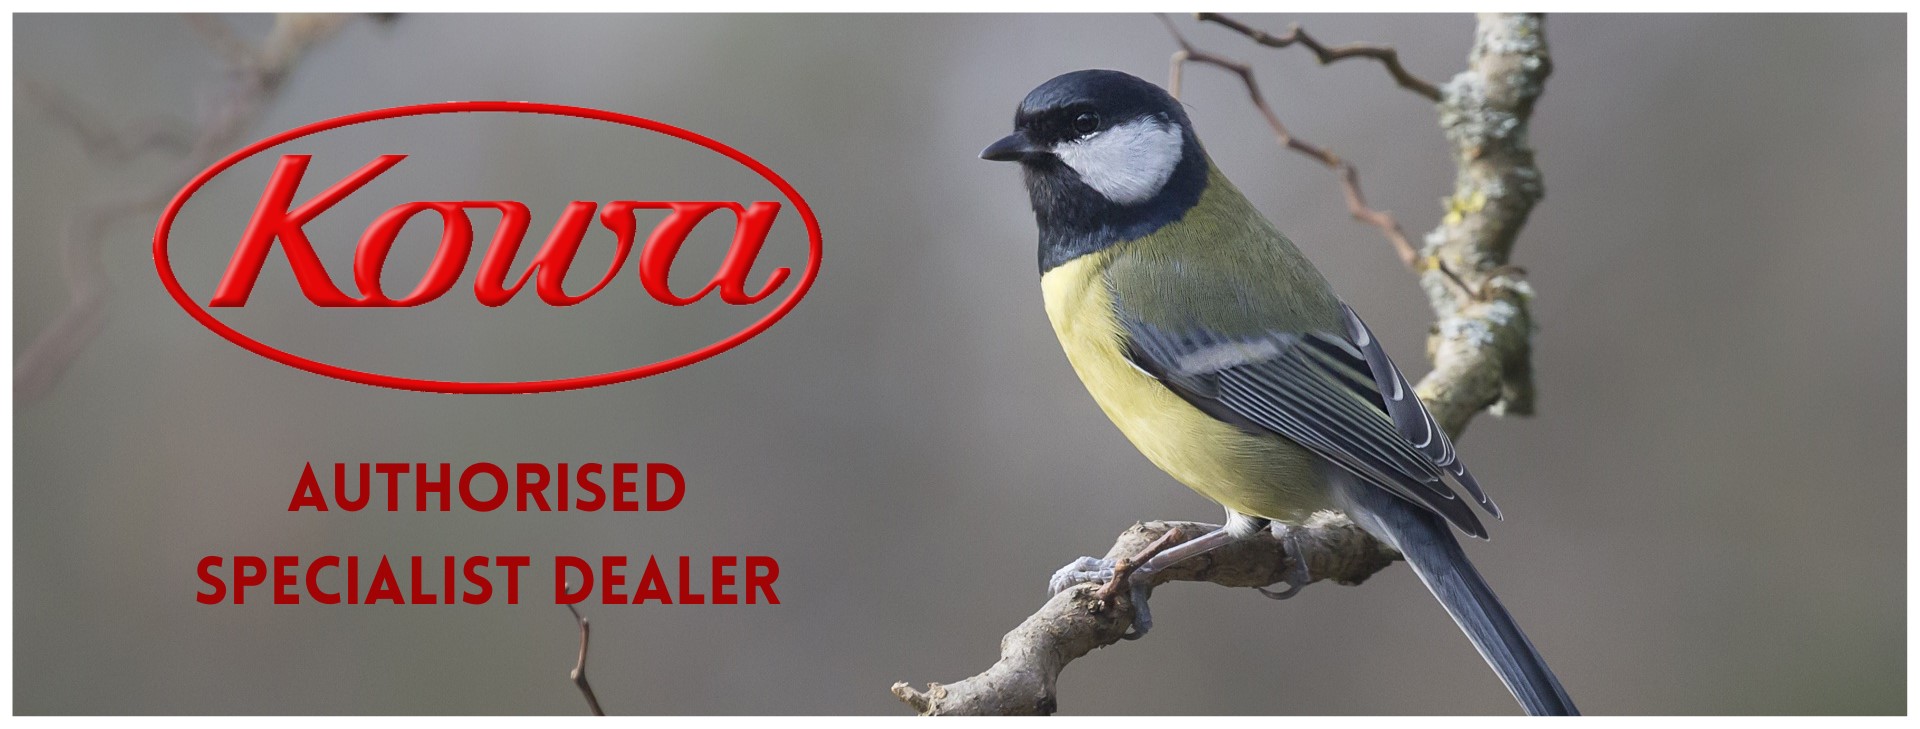 ace optics is a kowa authorised dealer. bird picture